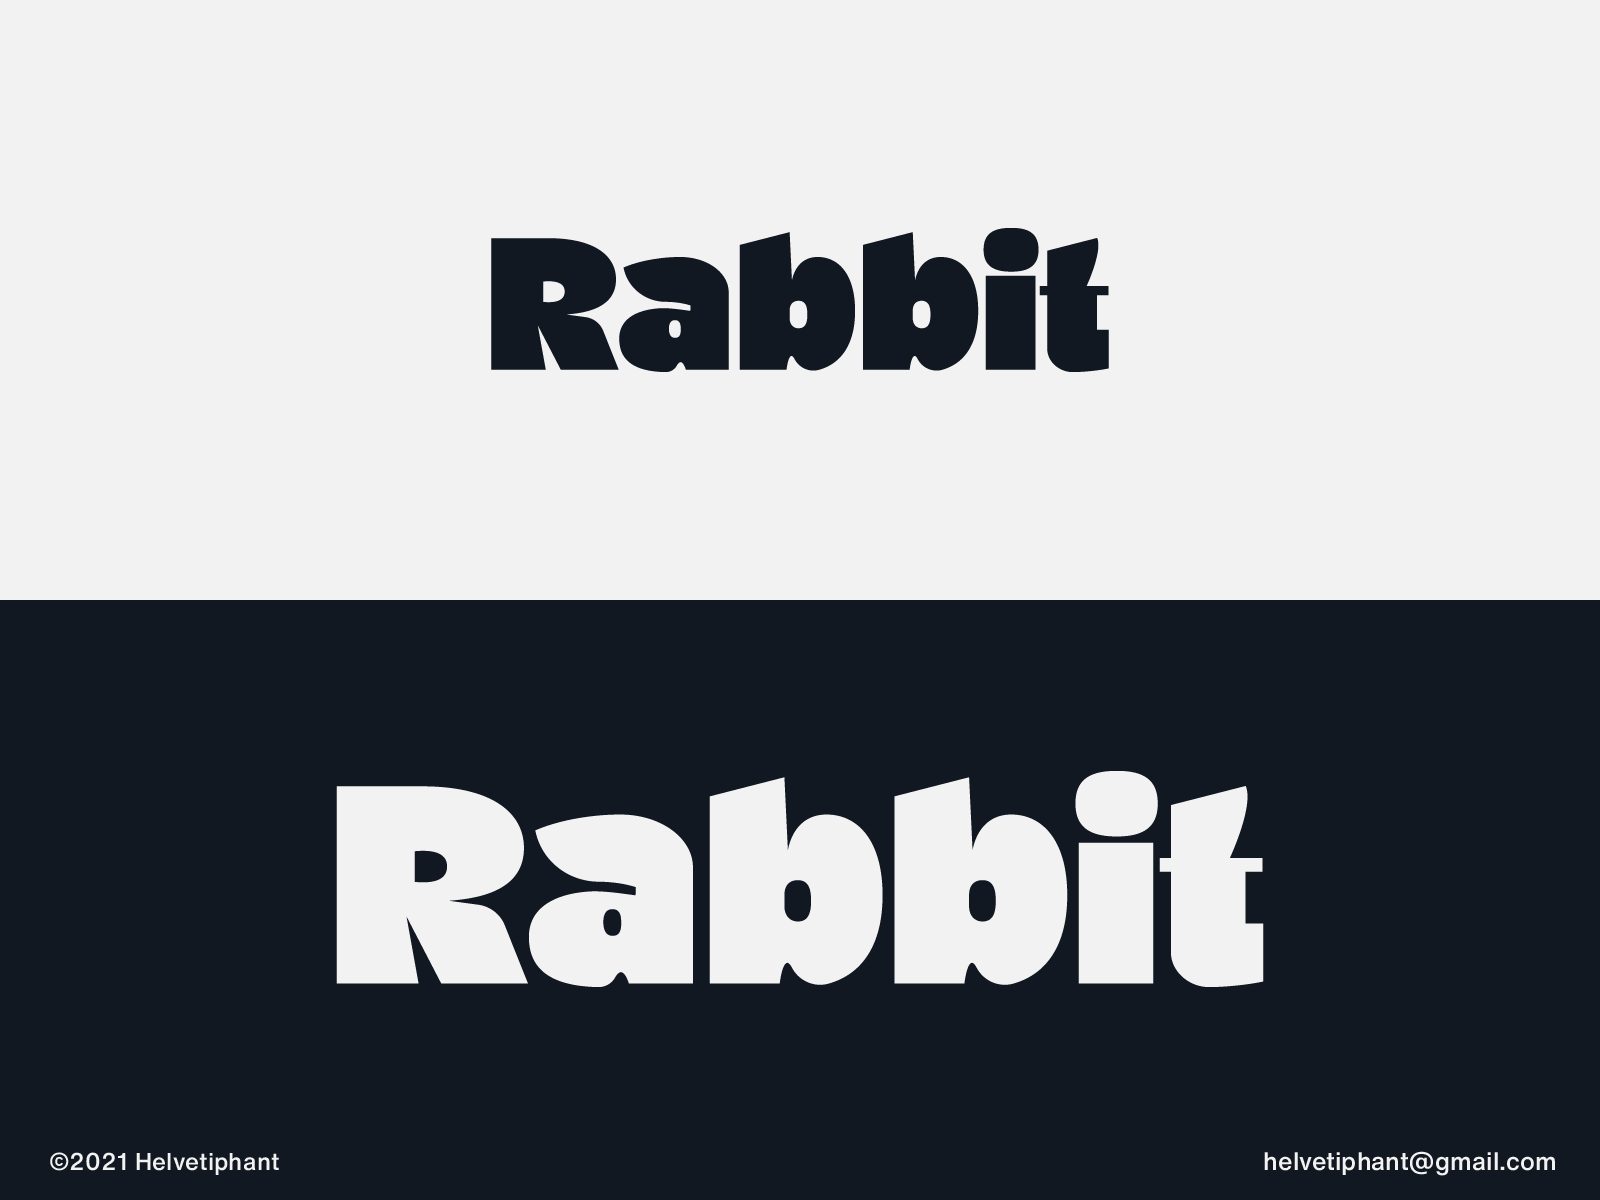 Rabbit - wordmark concept by Helvetiphant™ on Dribbble